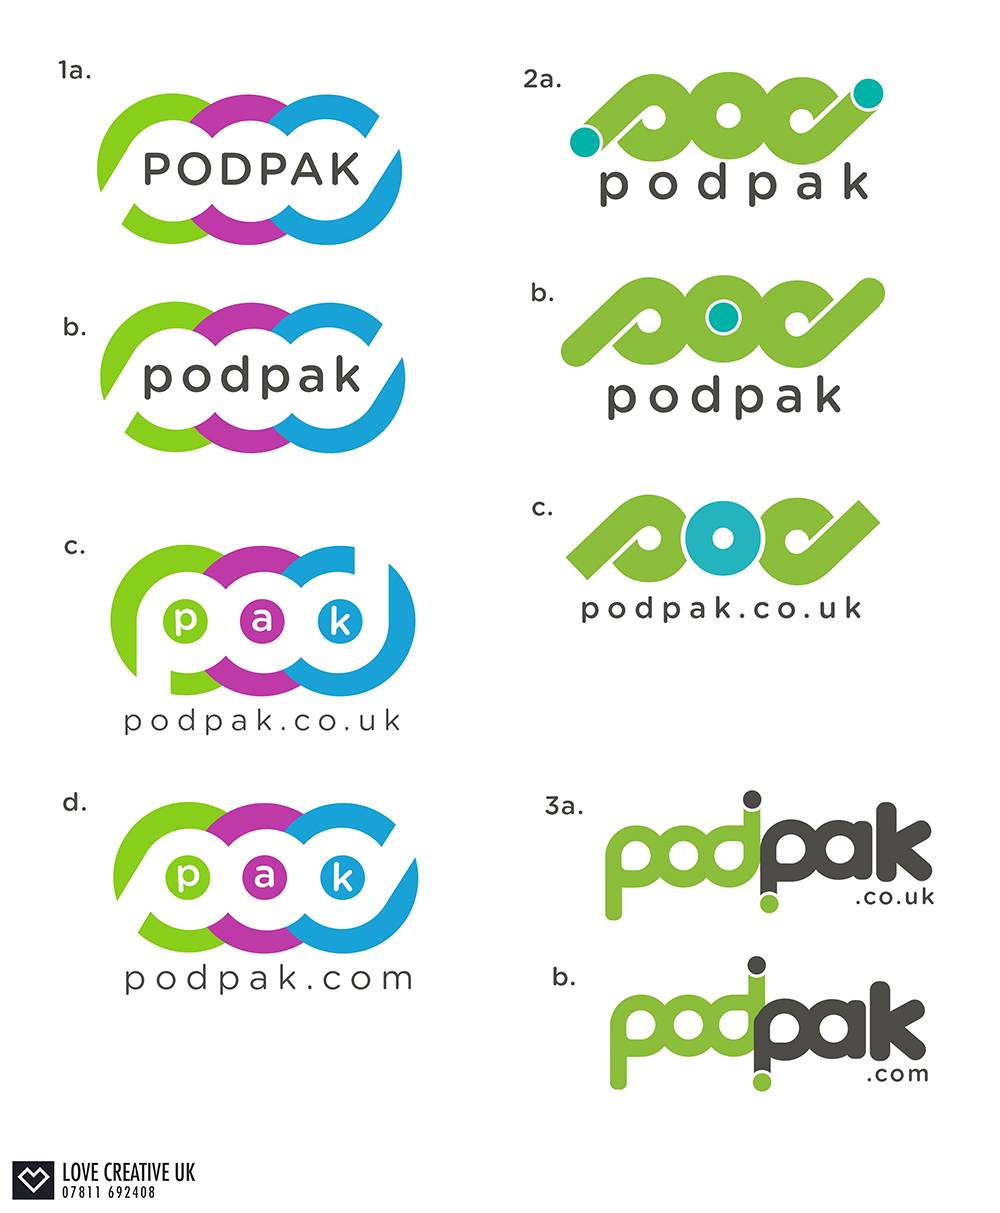 Podpak logo concepts